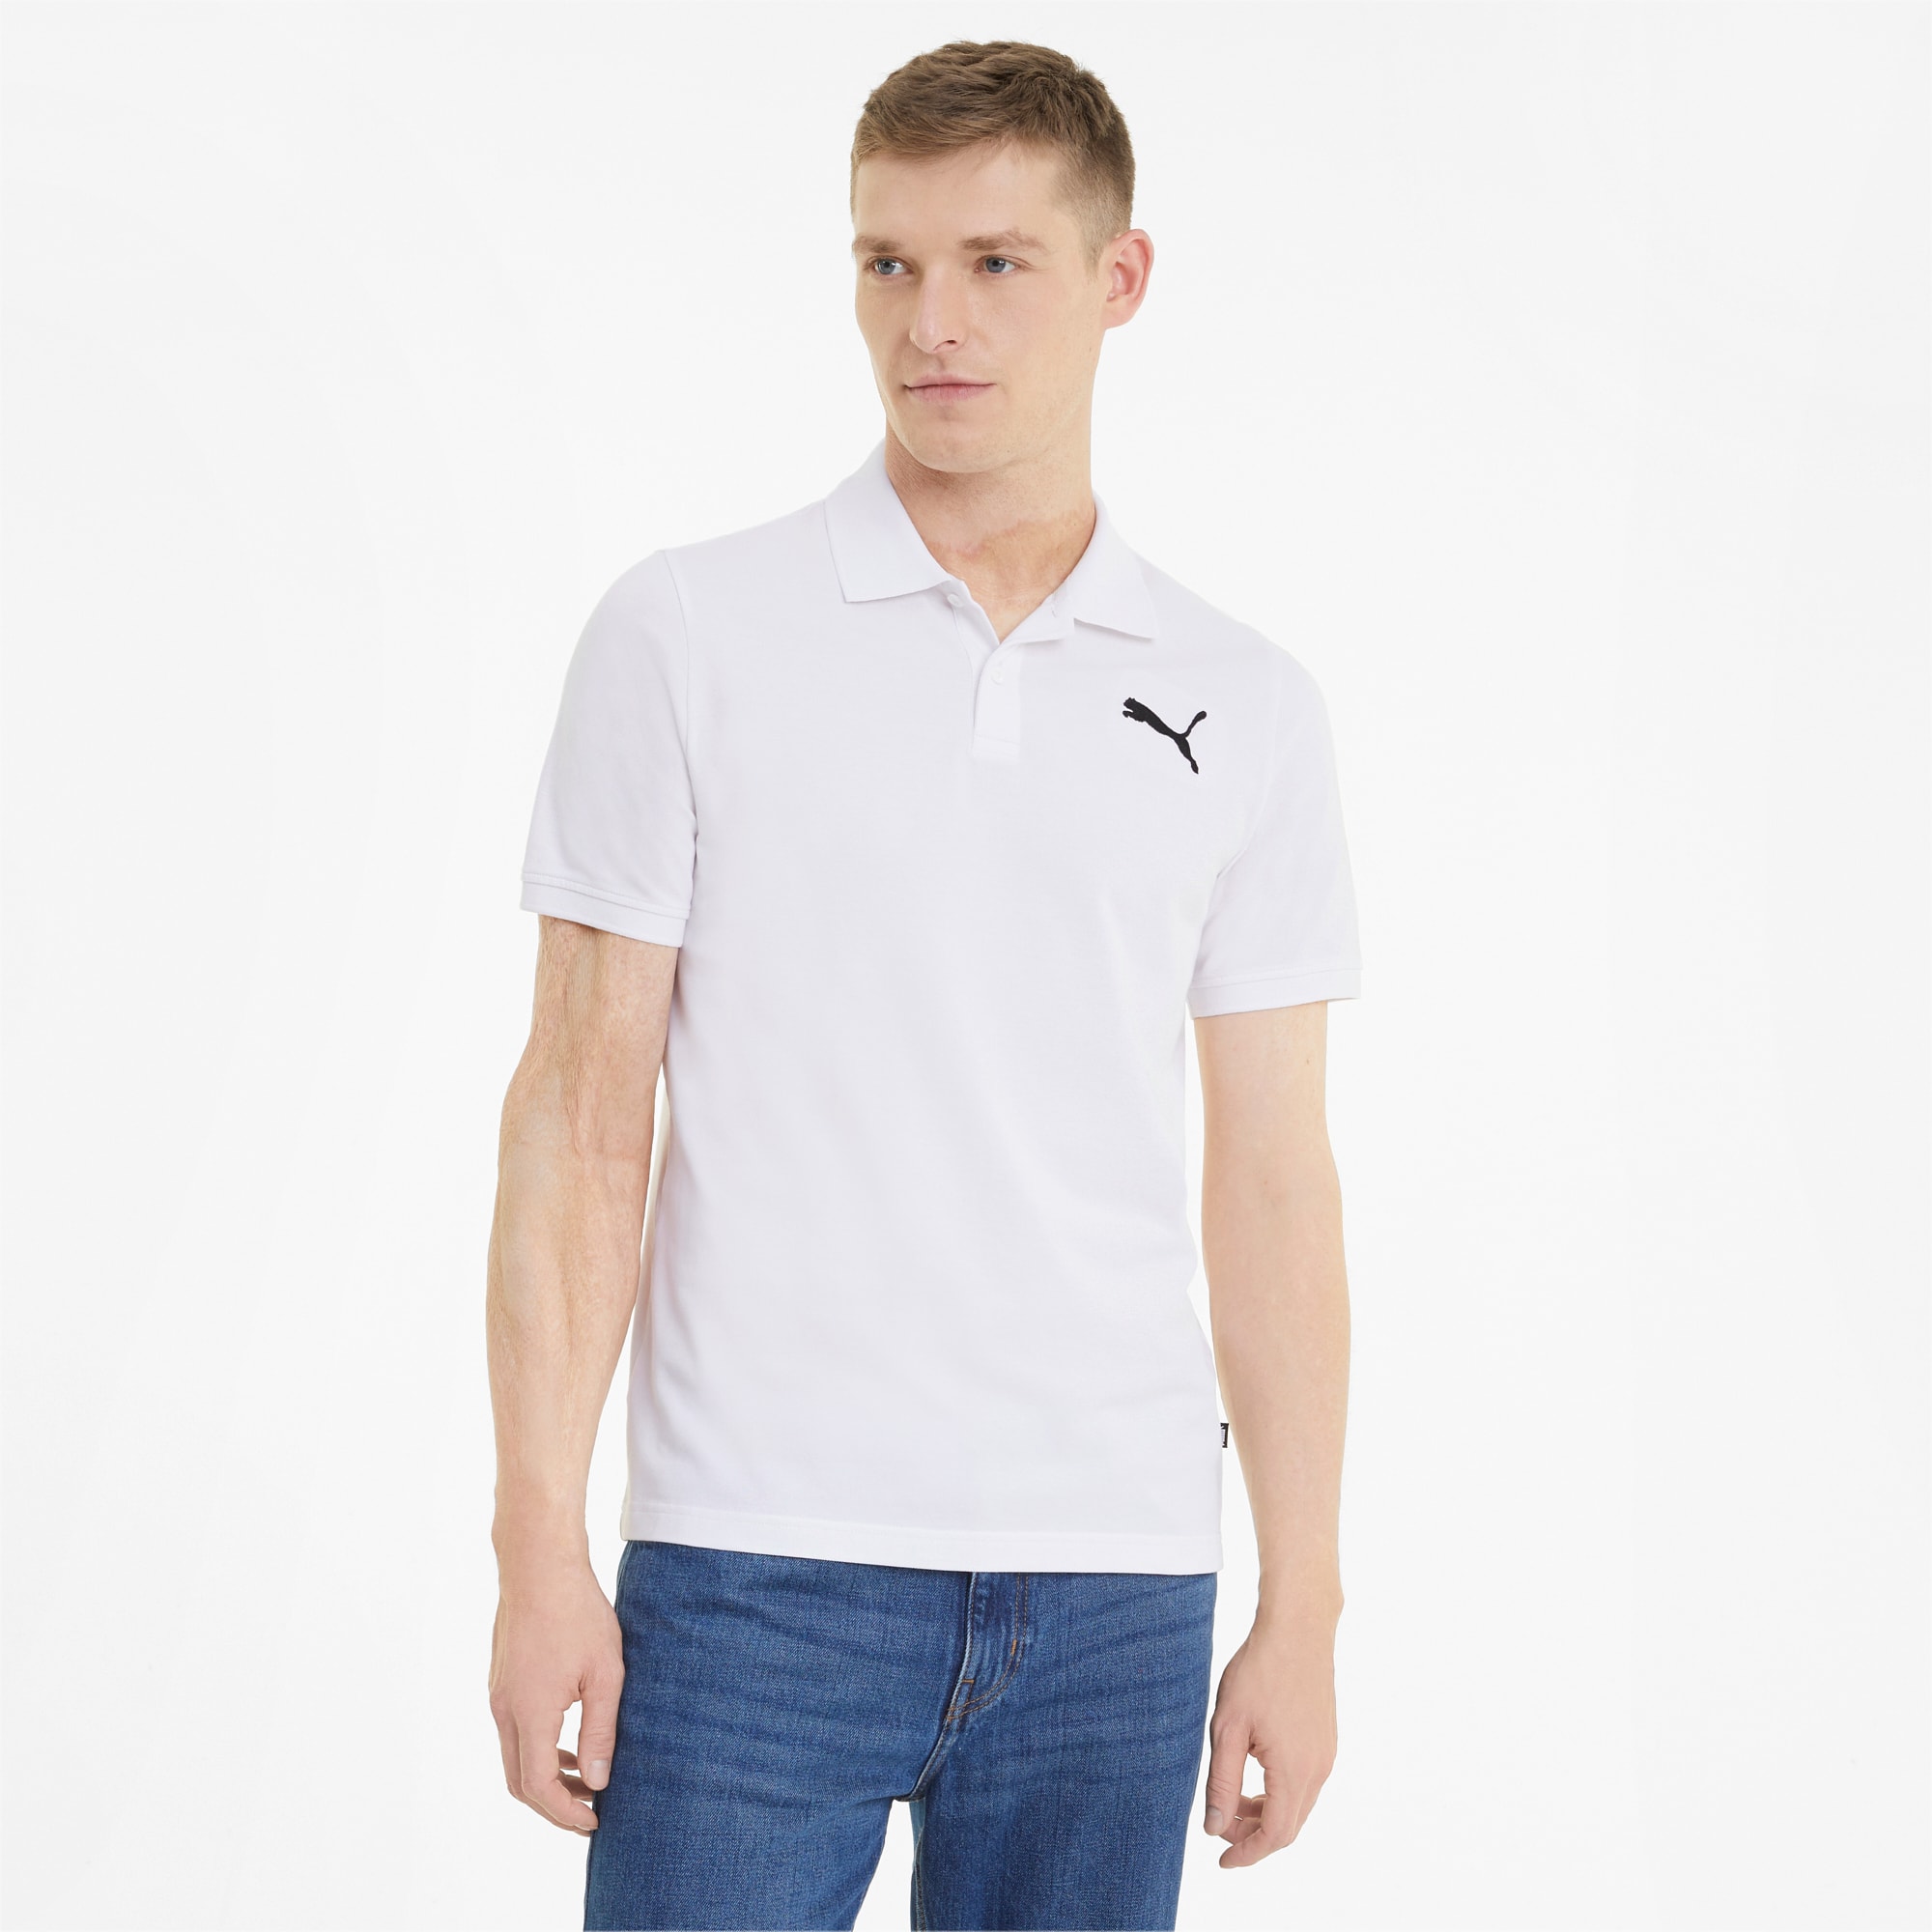 PUMA Essentials Pique Men's Polo Shirt, White, Size XS, Clothing